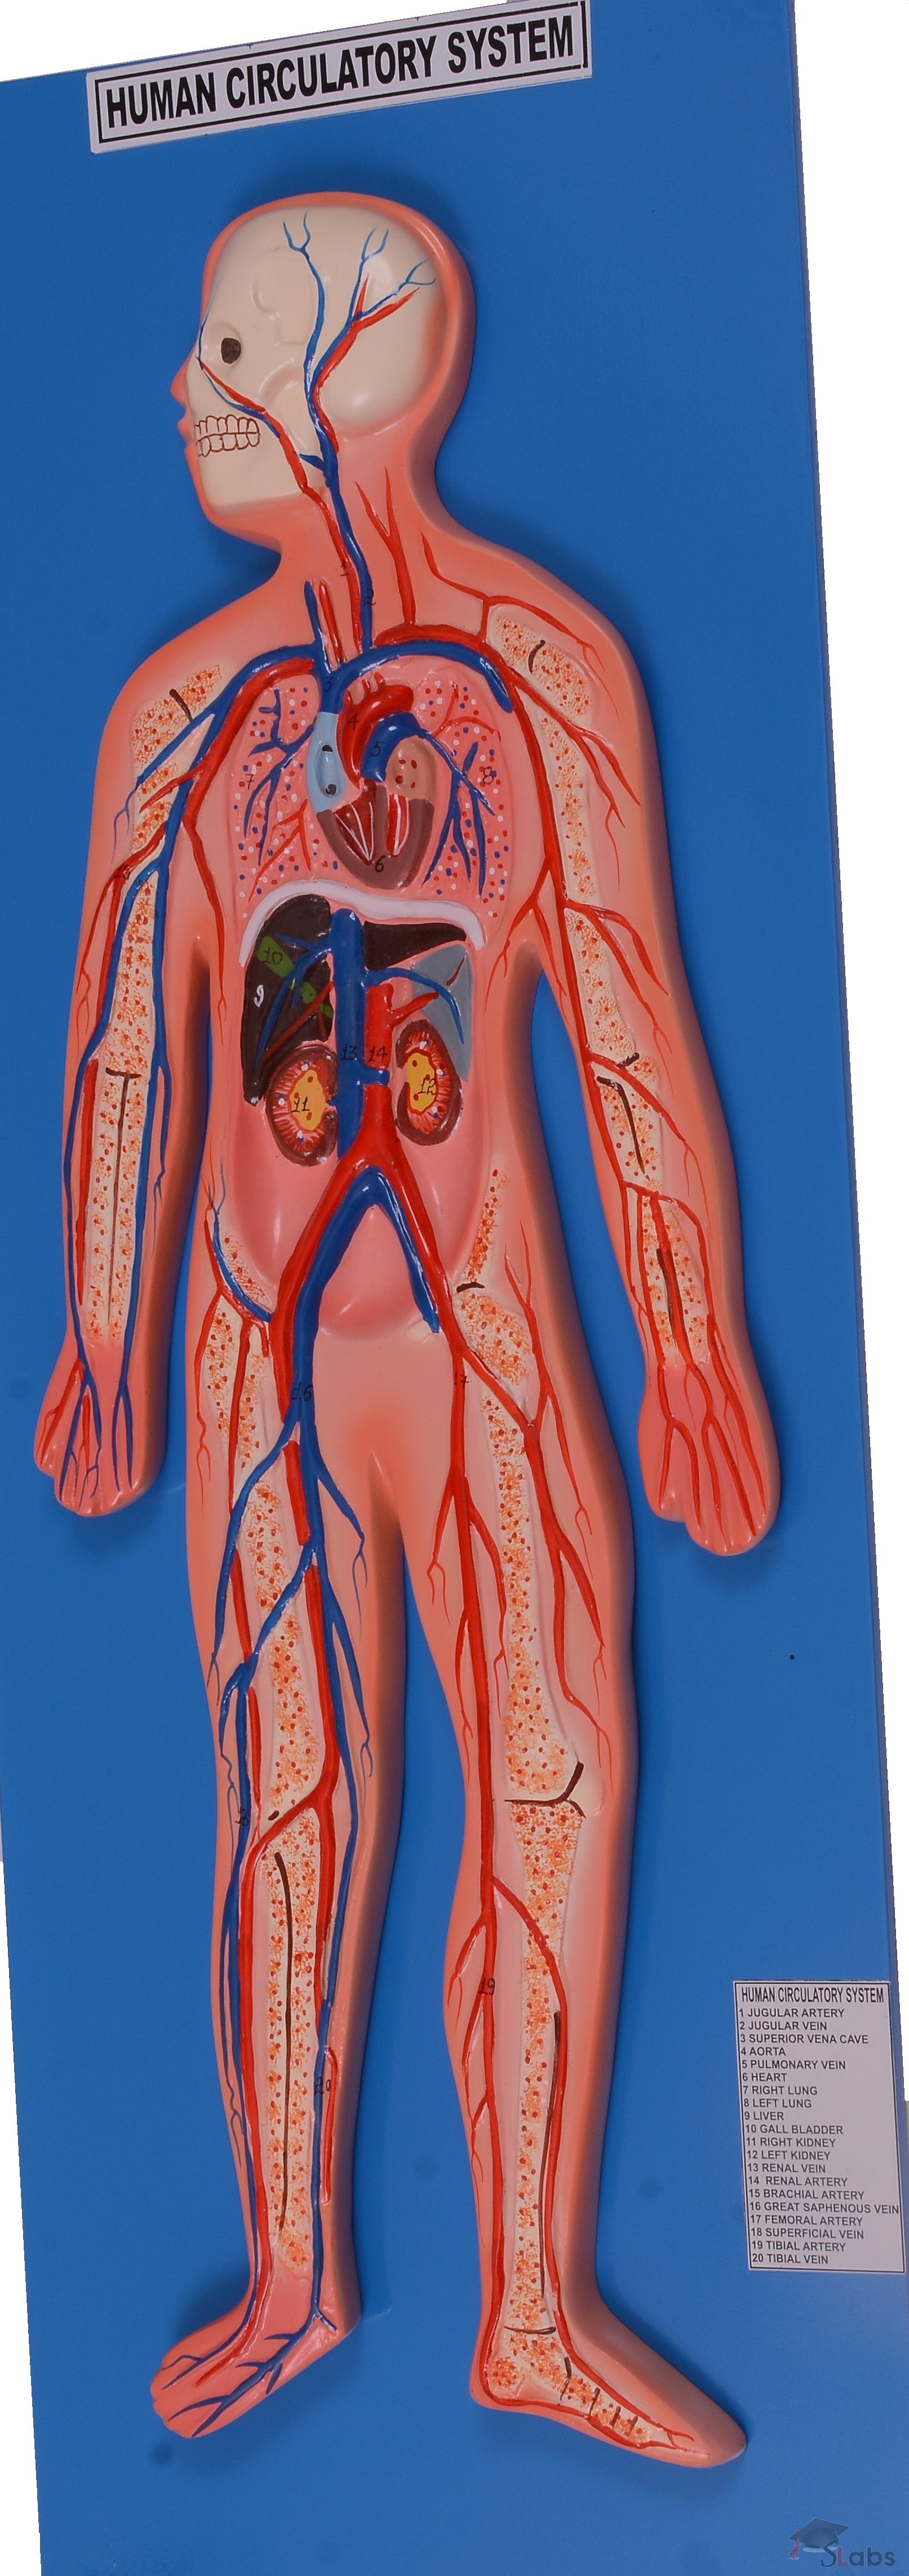 Human Circulatory System - Scholars Labs